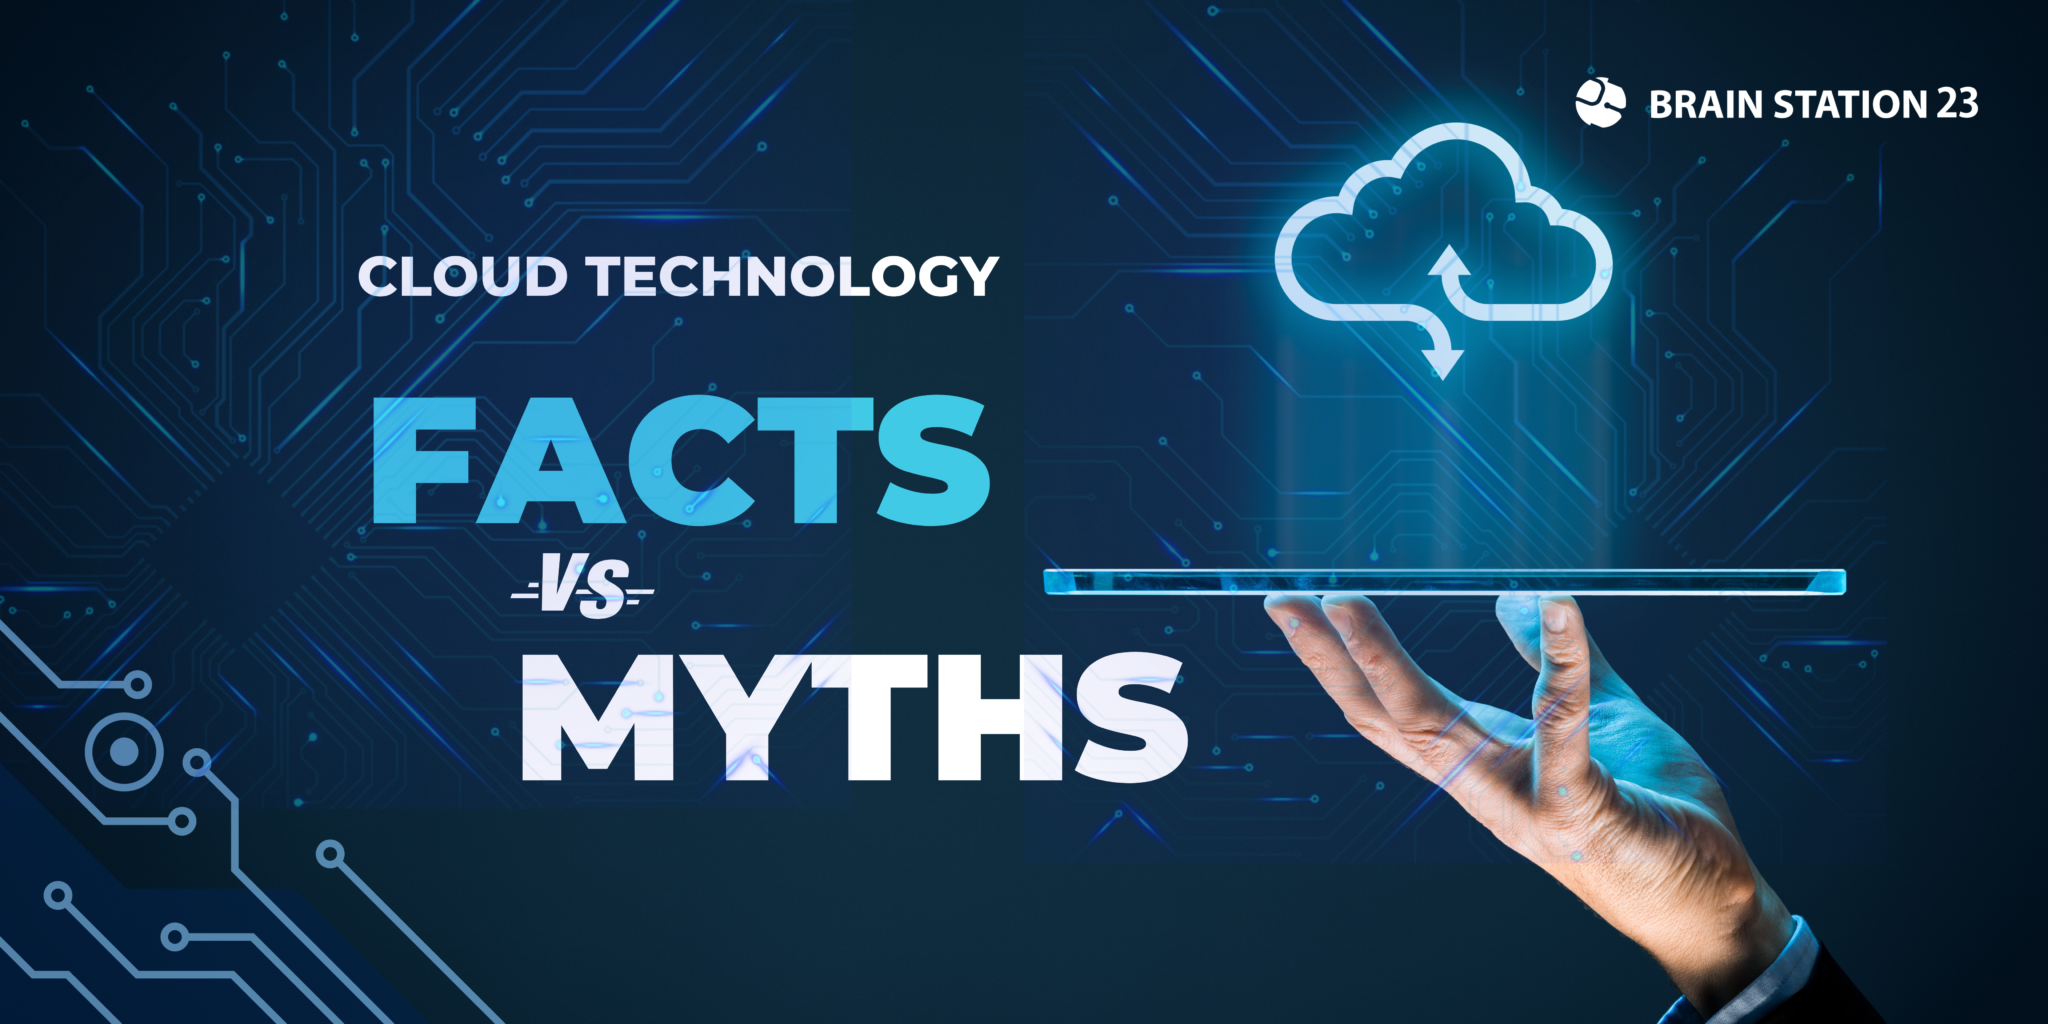 Common misconceptions about cloud technology! Cloud 23